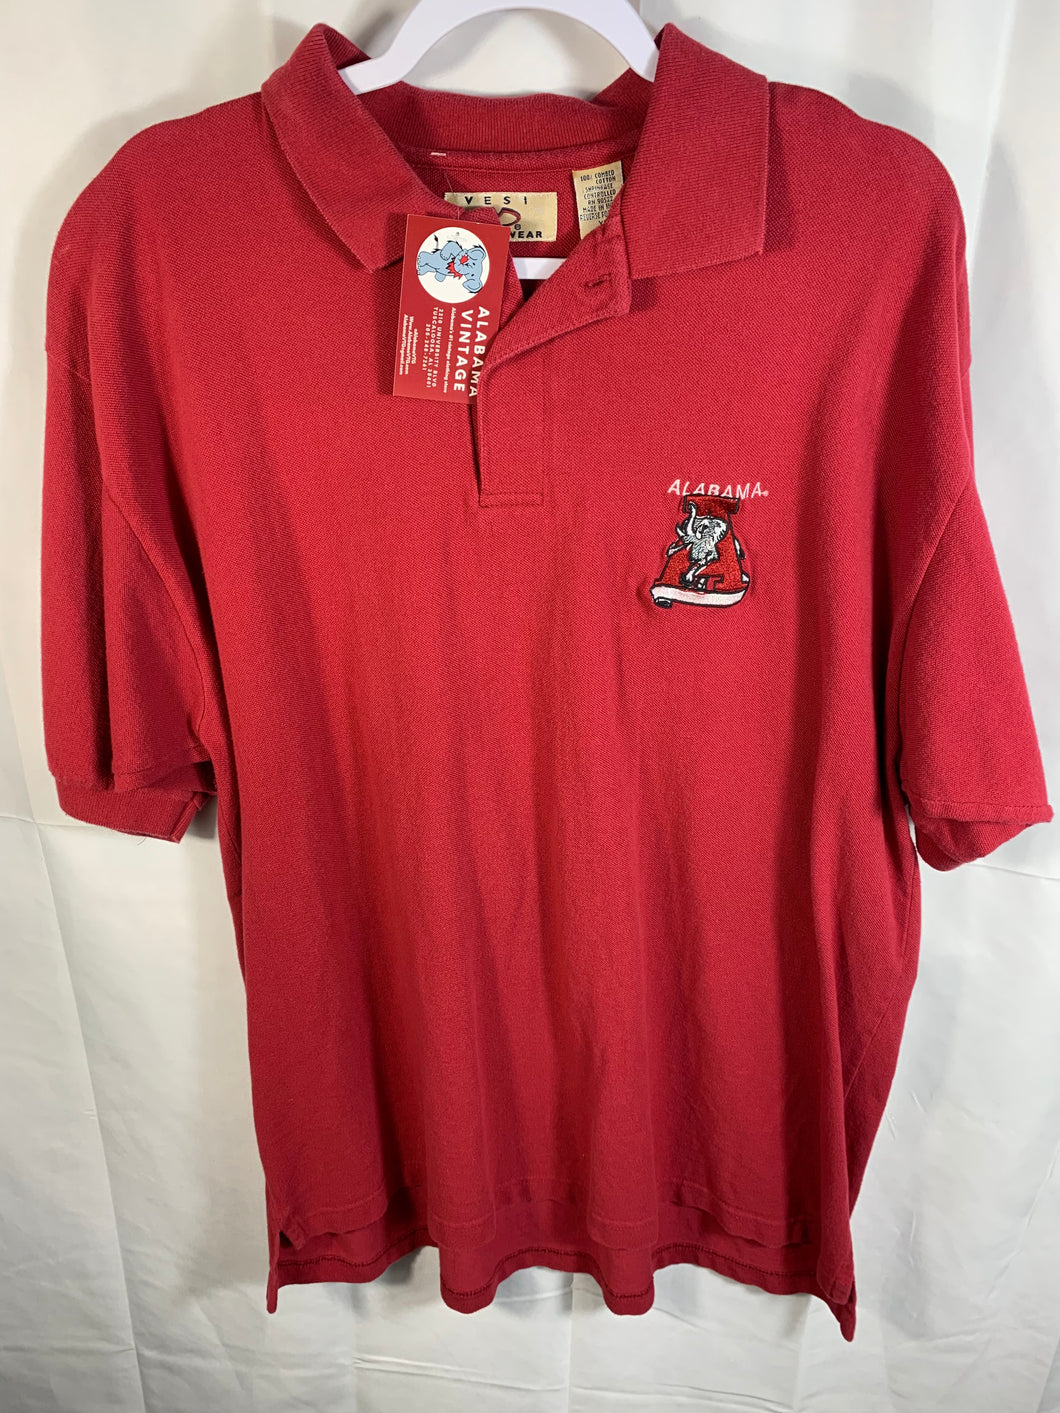 Vintage Alabama Polo Shirt XL